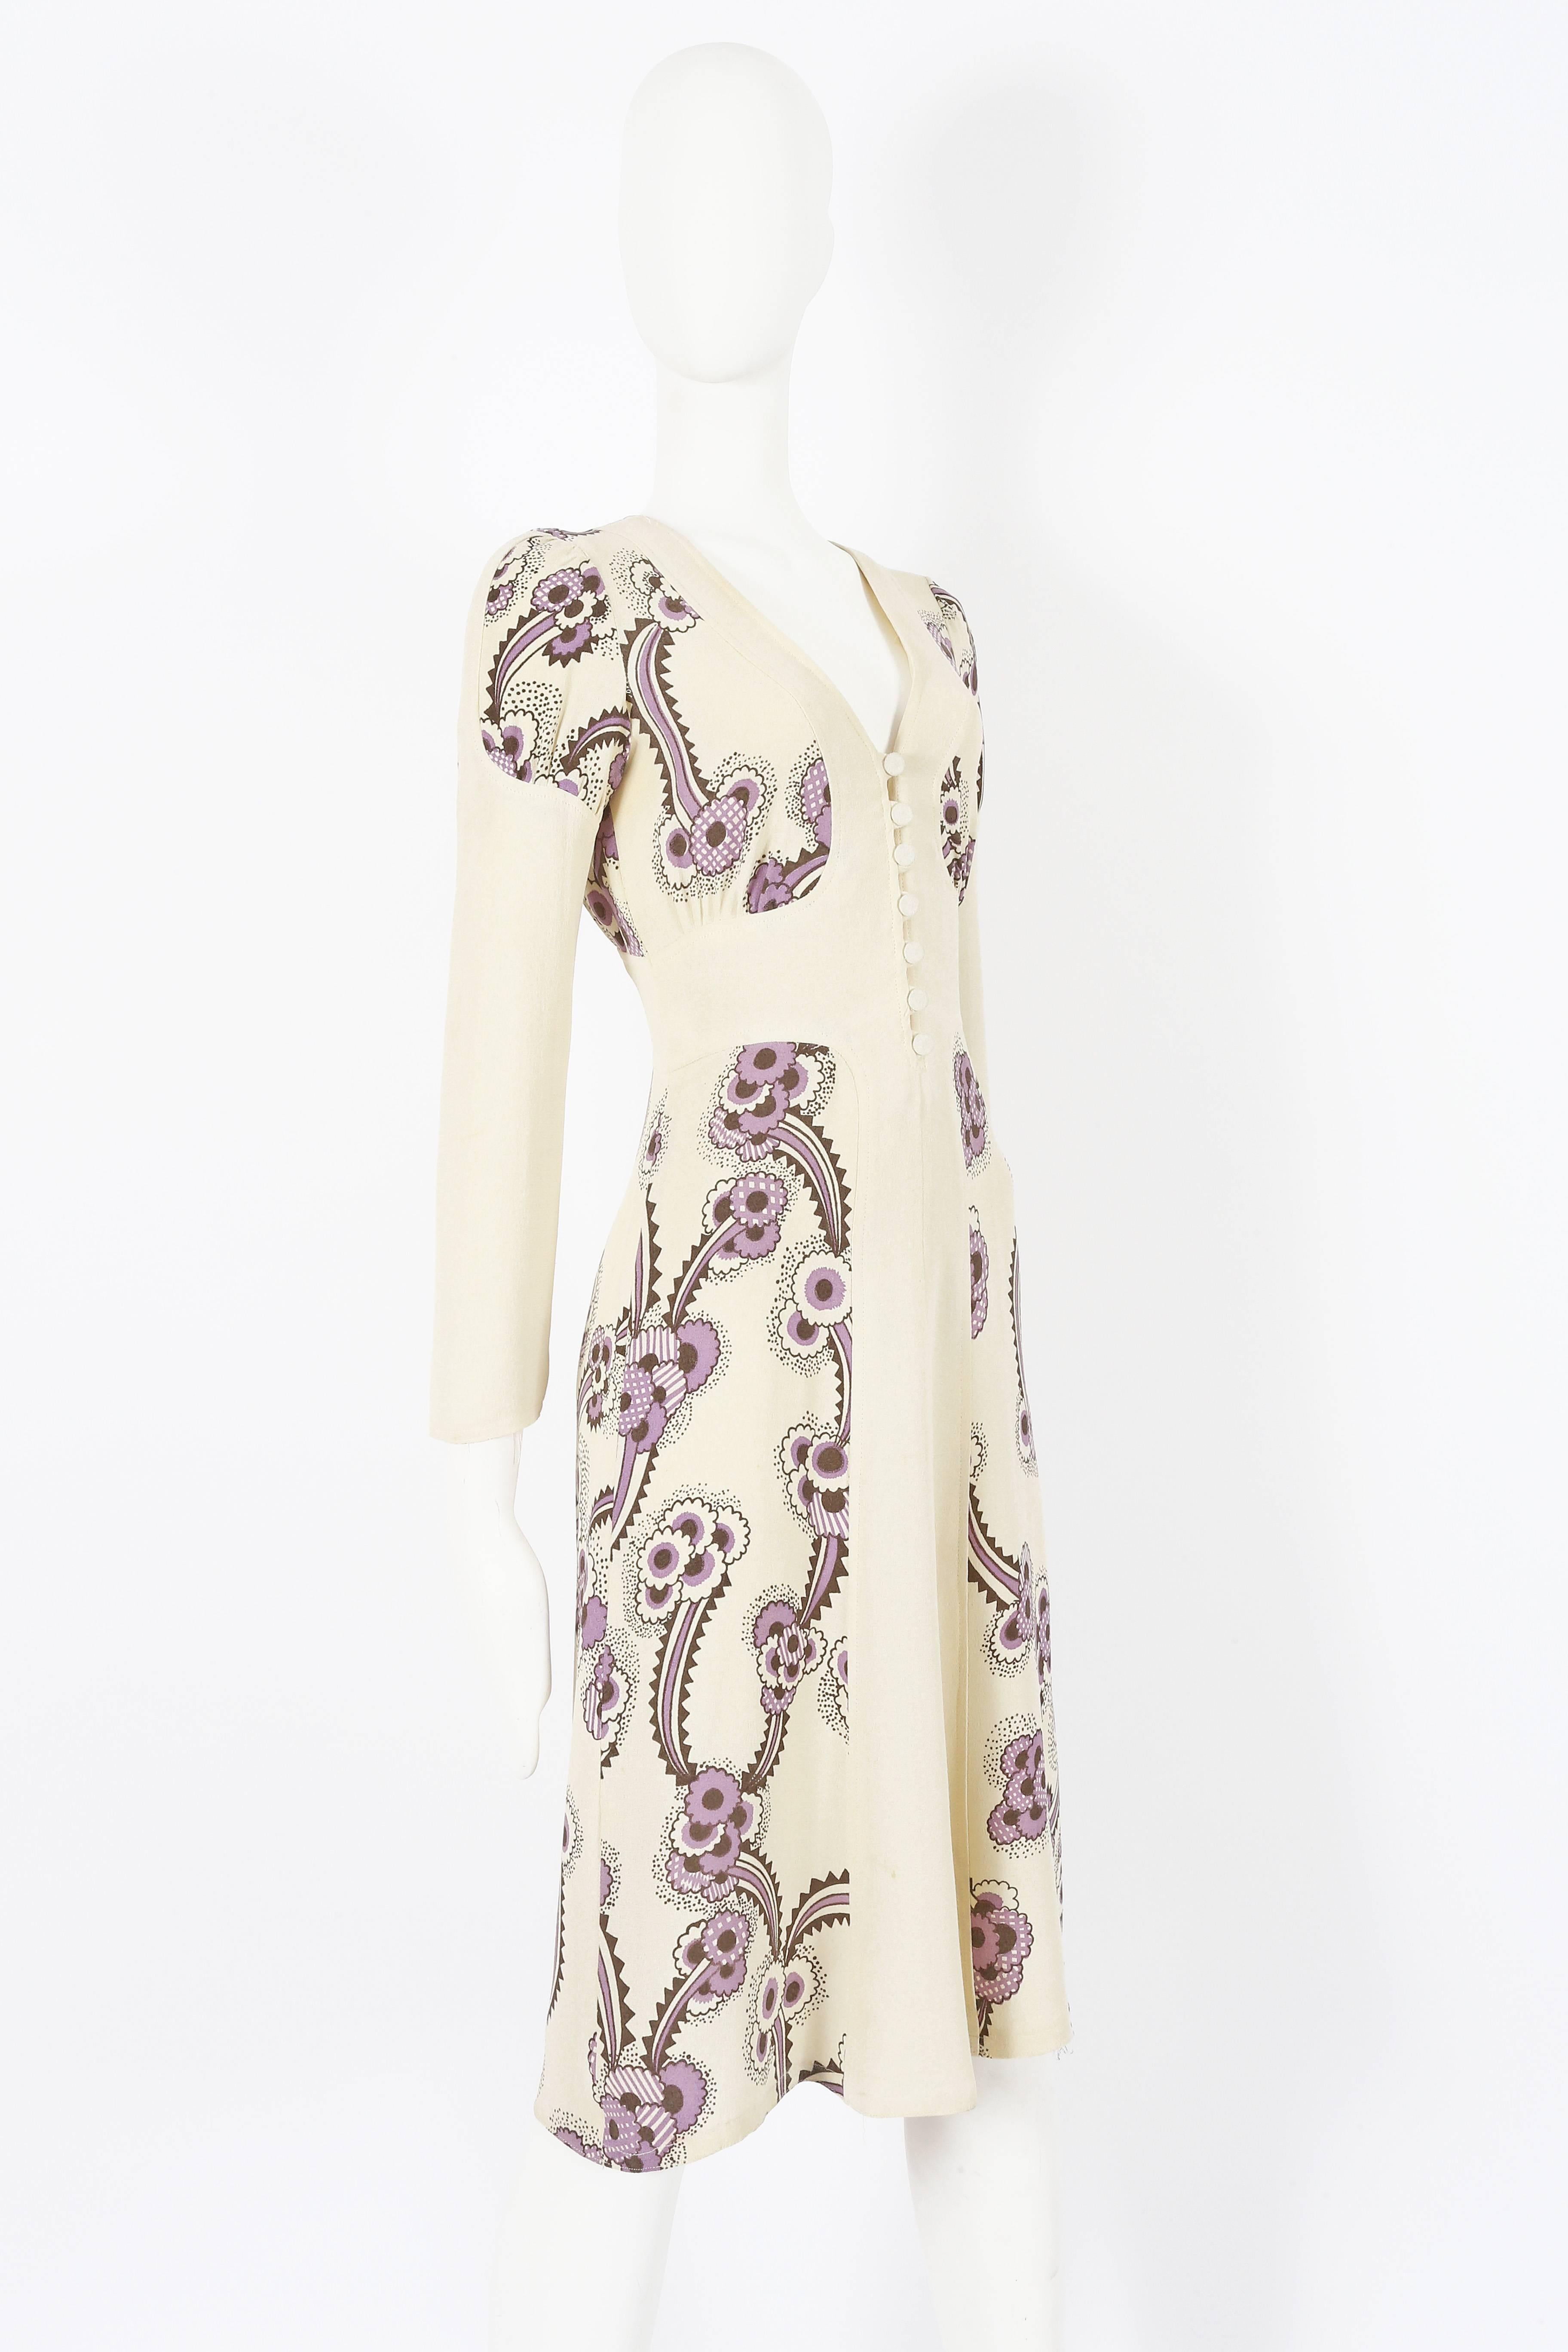 Women's Ossie Clark ivory moss crepe 'Floating Daisies' dress, circa 1970s